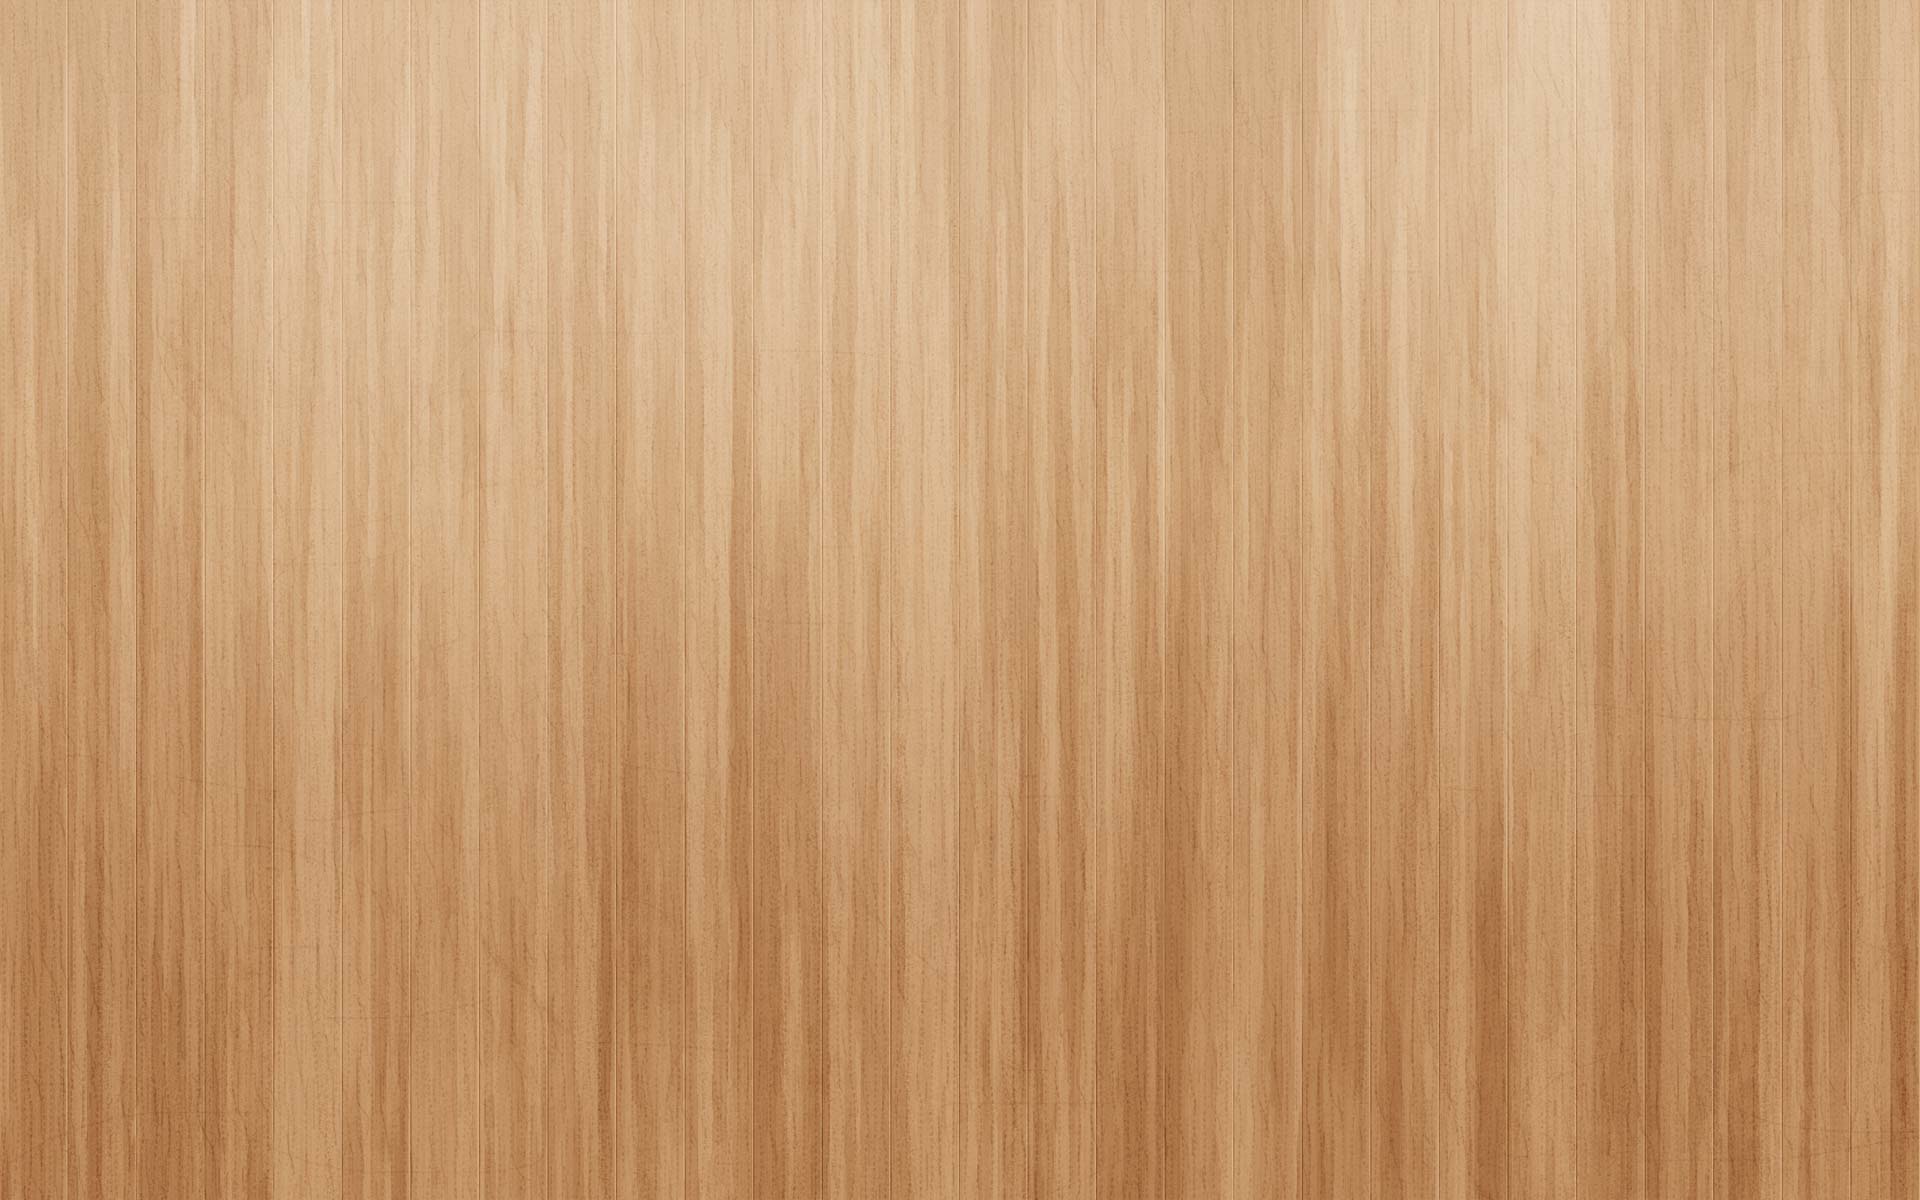 Light Wood Grain Background